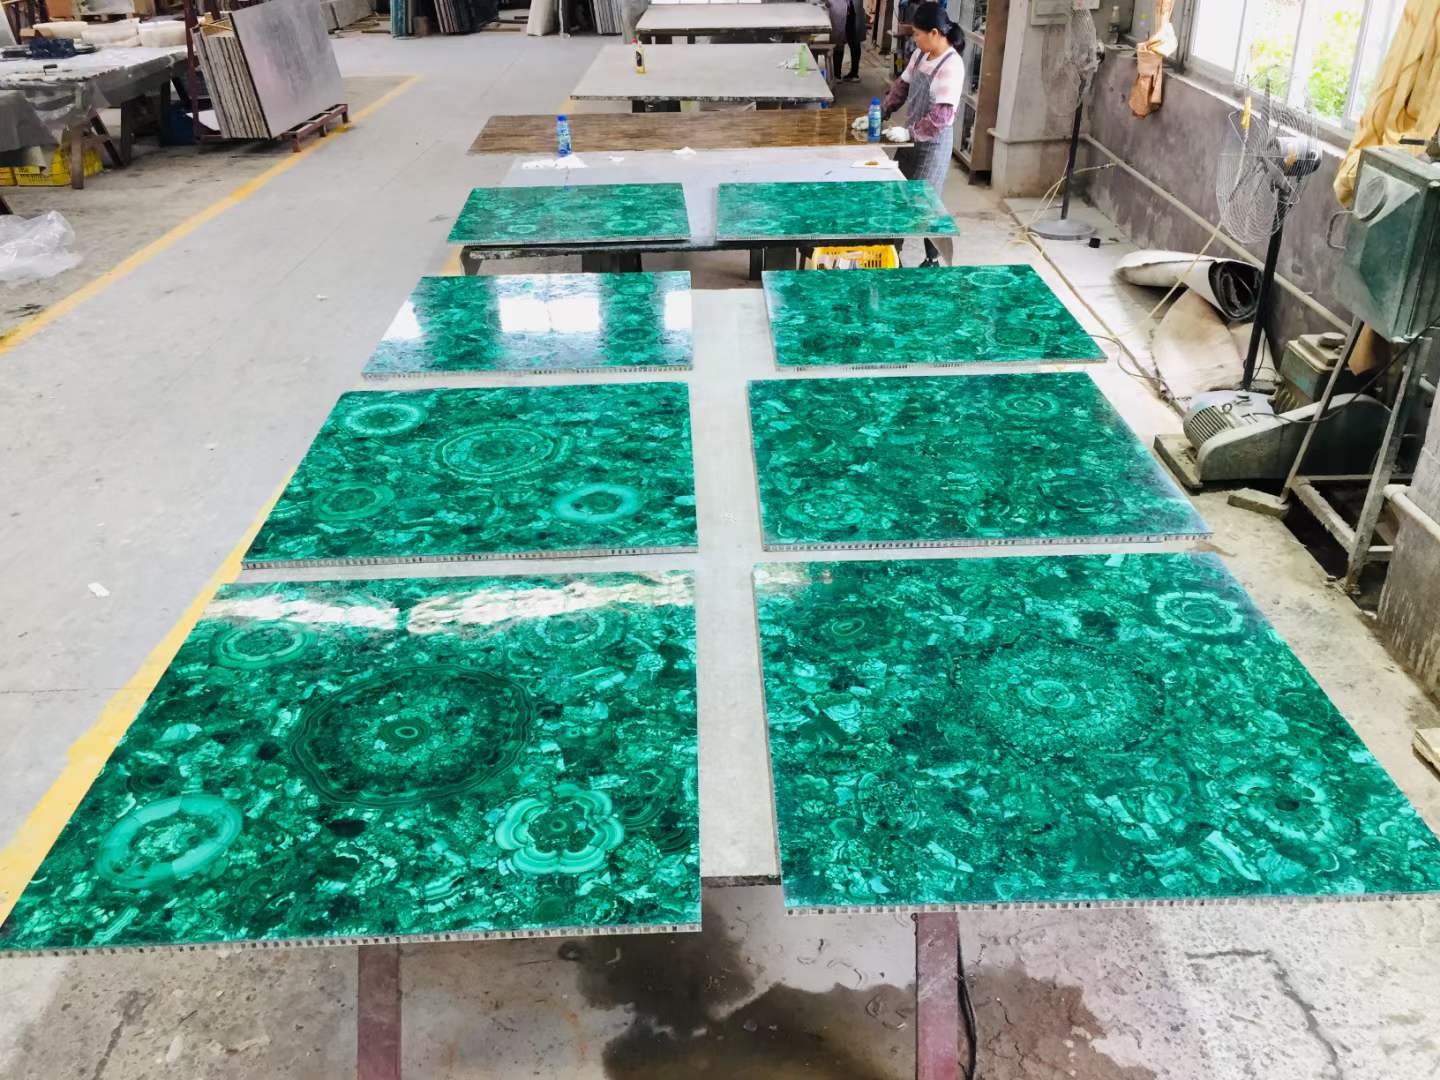 Luxury malachite green slab